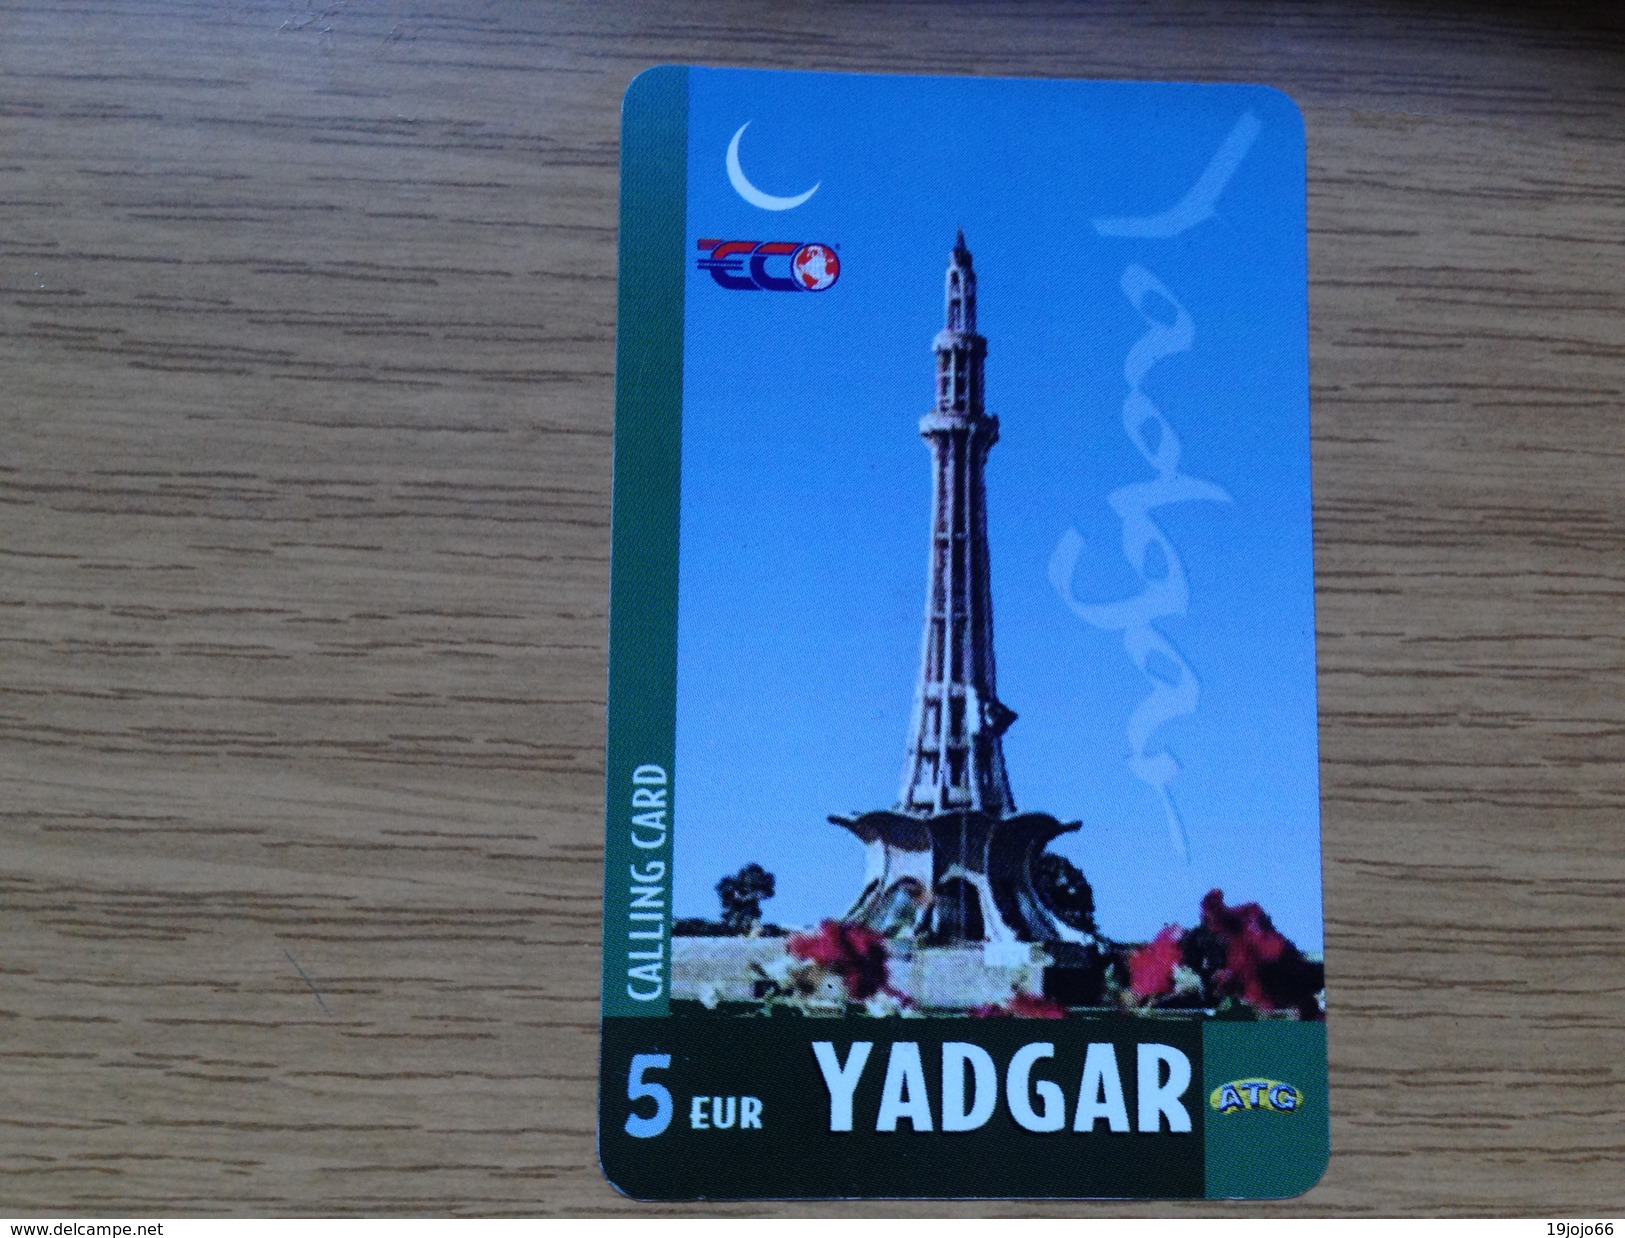 Yadgar -   5  Euro - Great Tower  / Building   - Little Printed  -   Mint Condition - GSM, Cartes Prepayées & Recharges